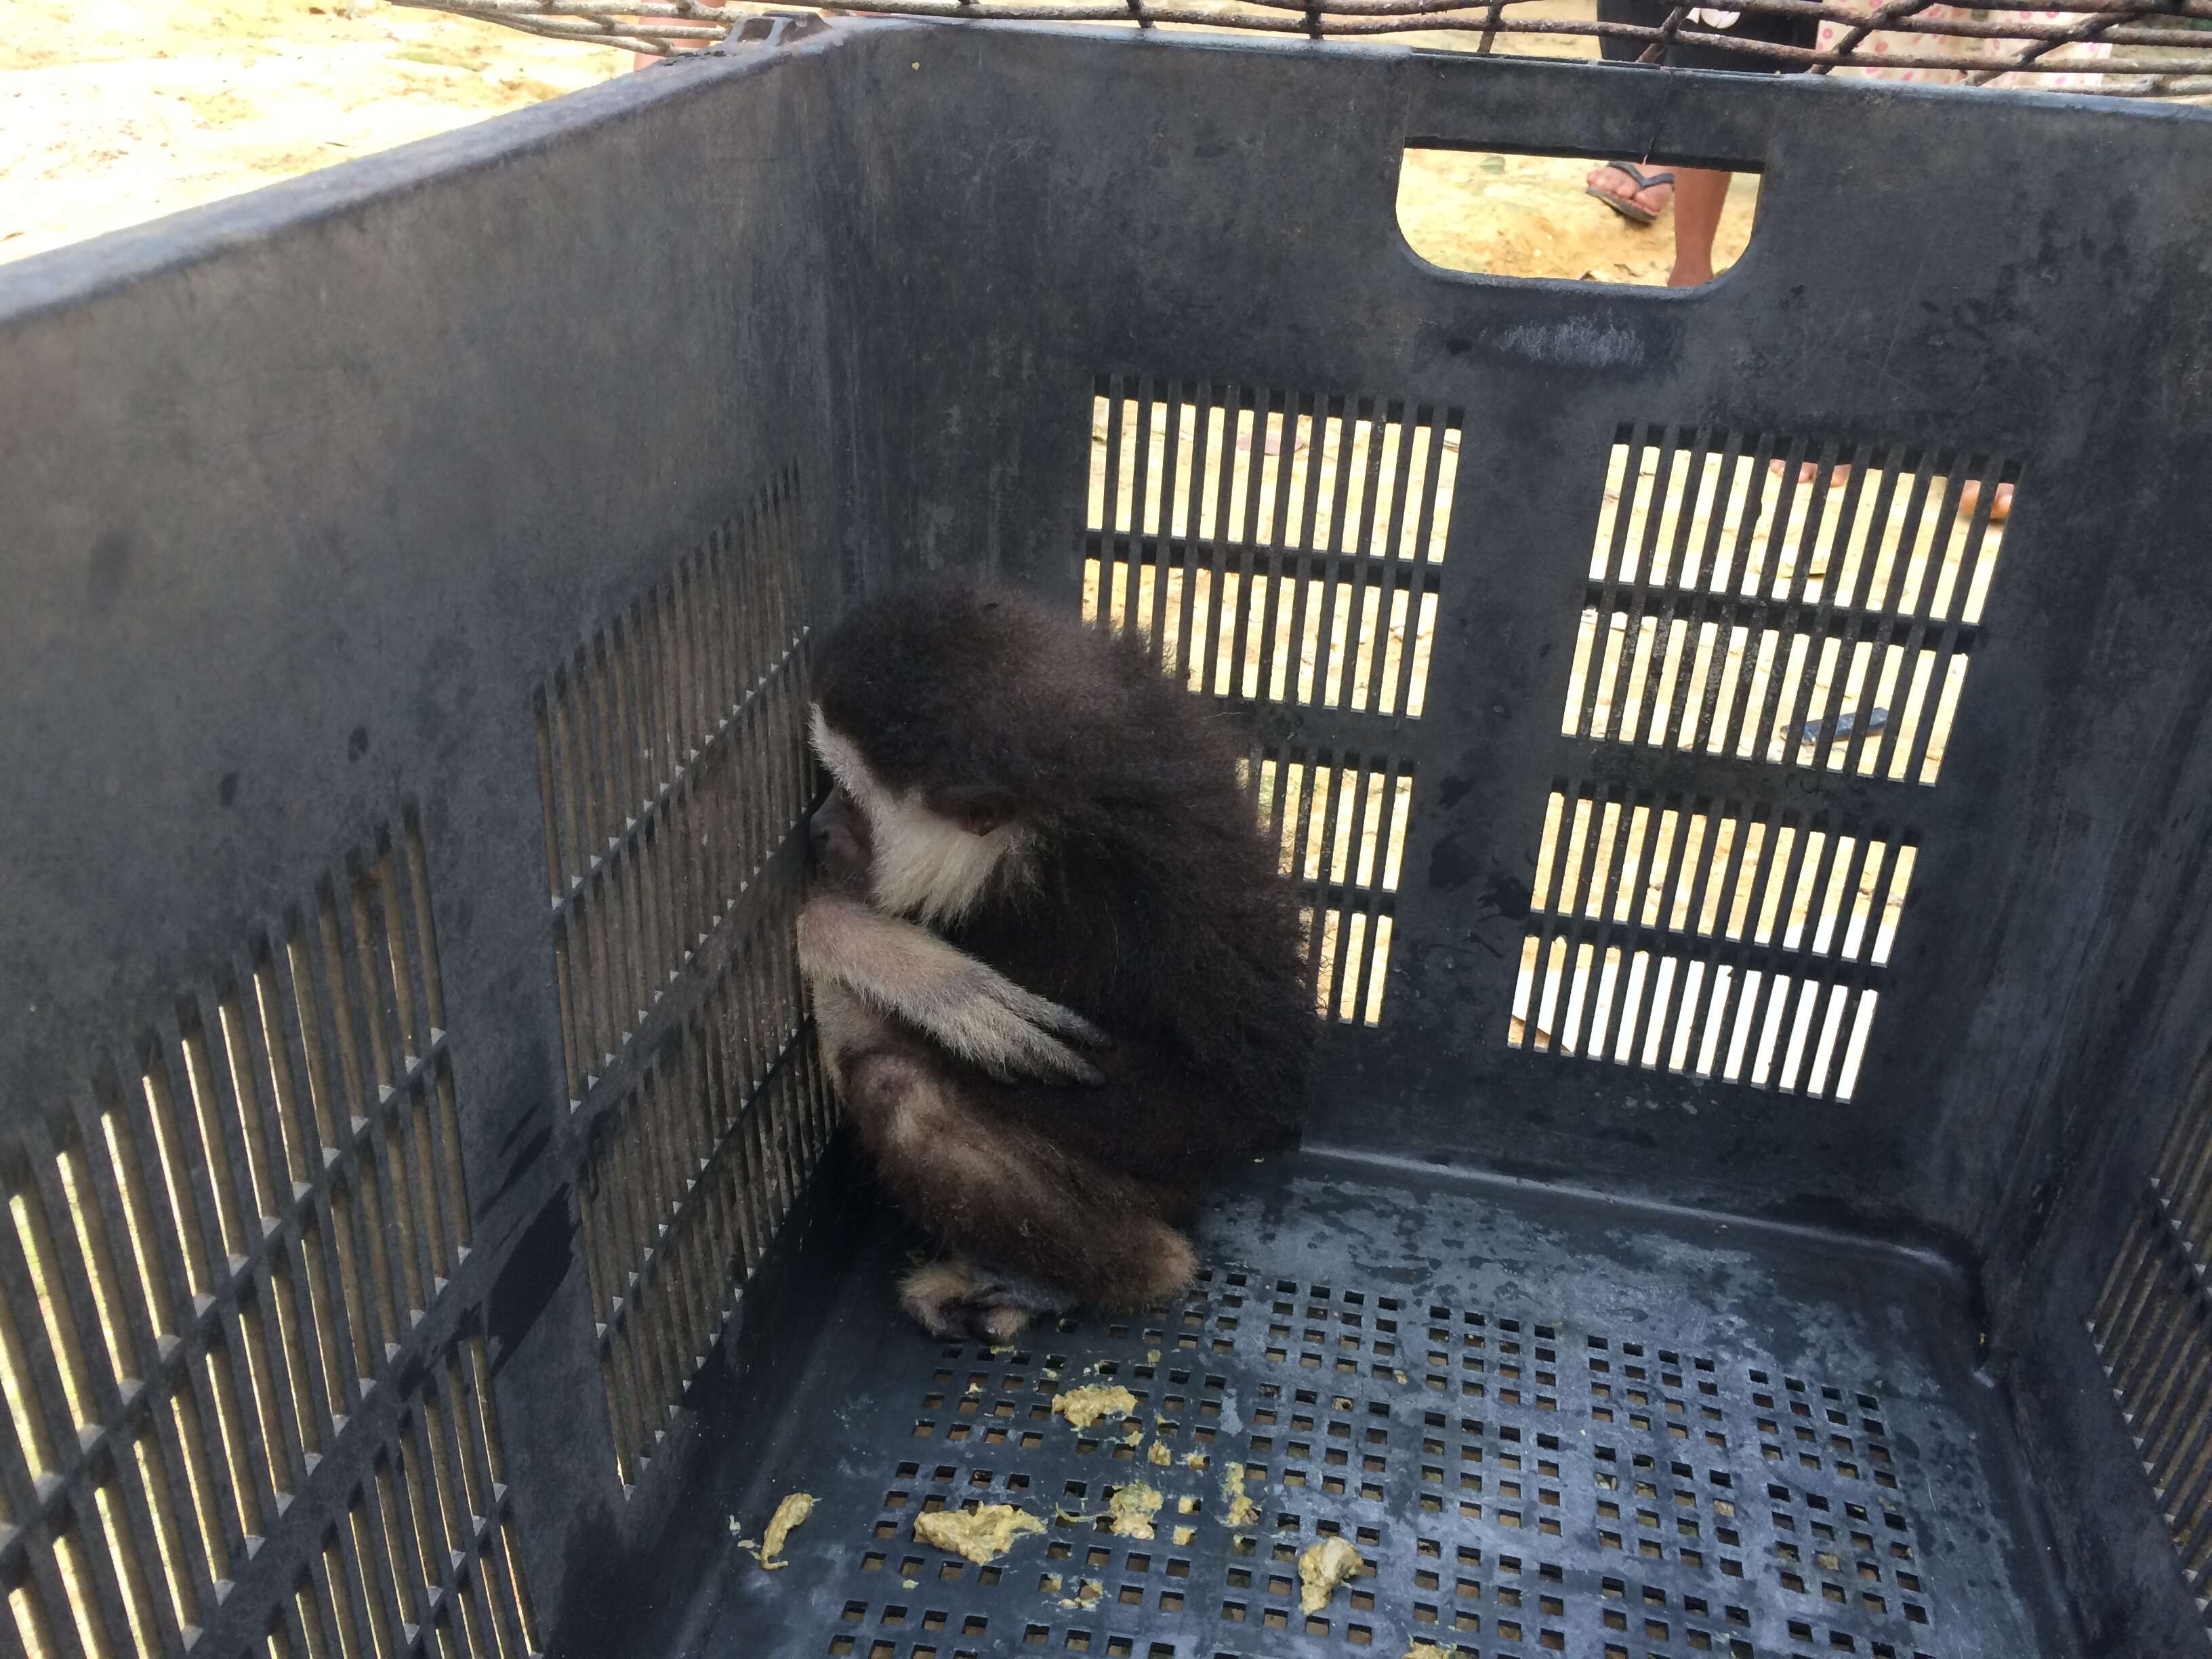 Wild gibbon trapped inside fruit basket